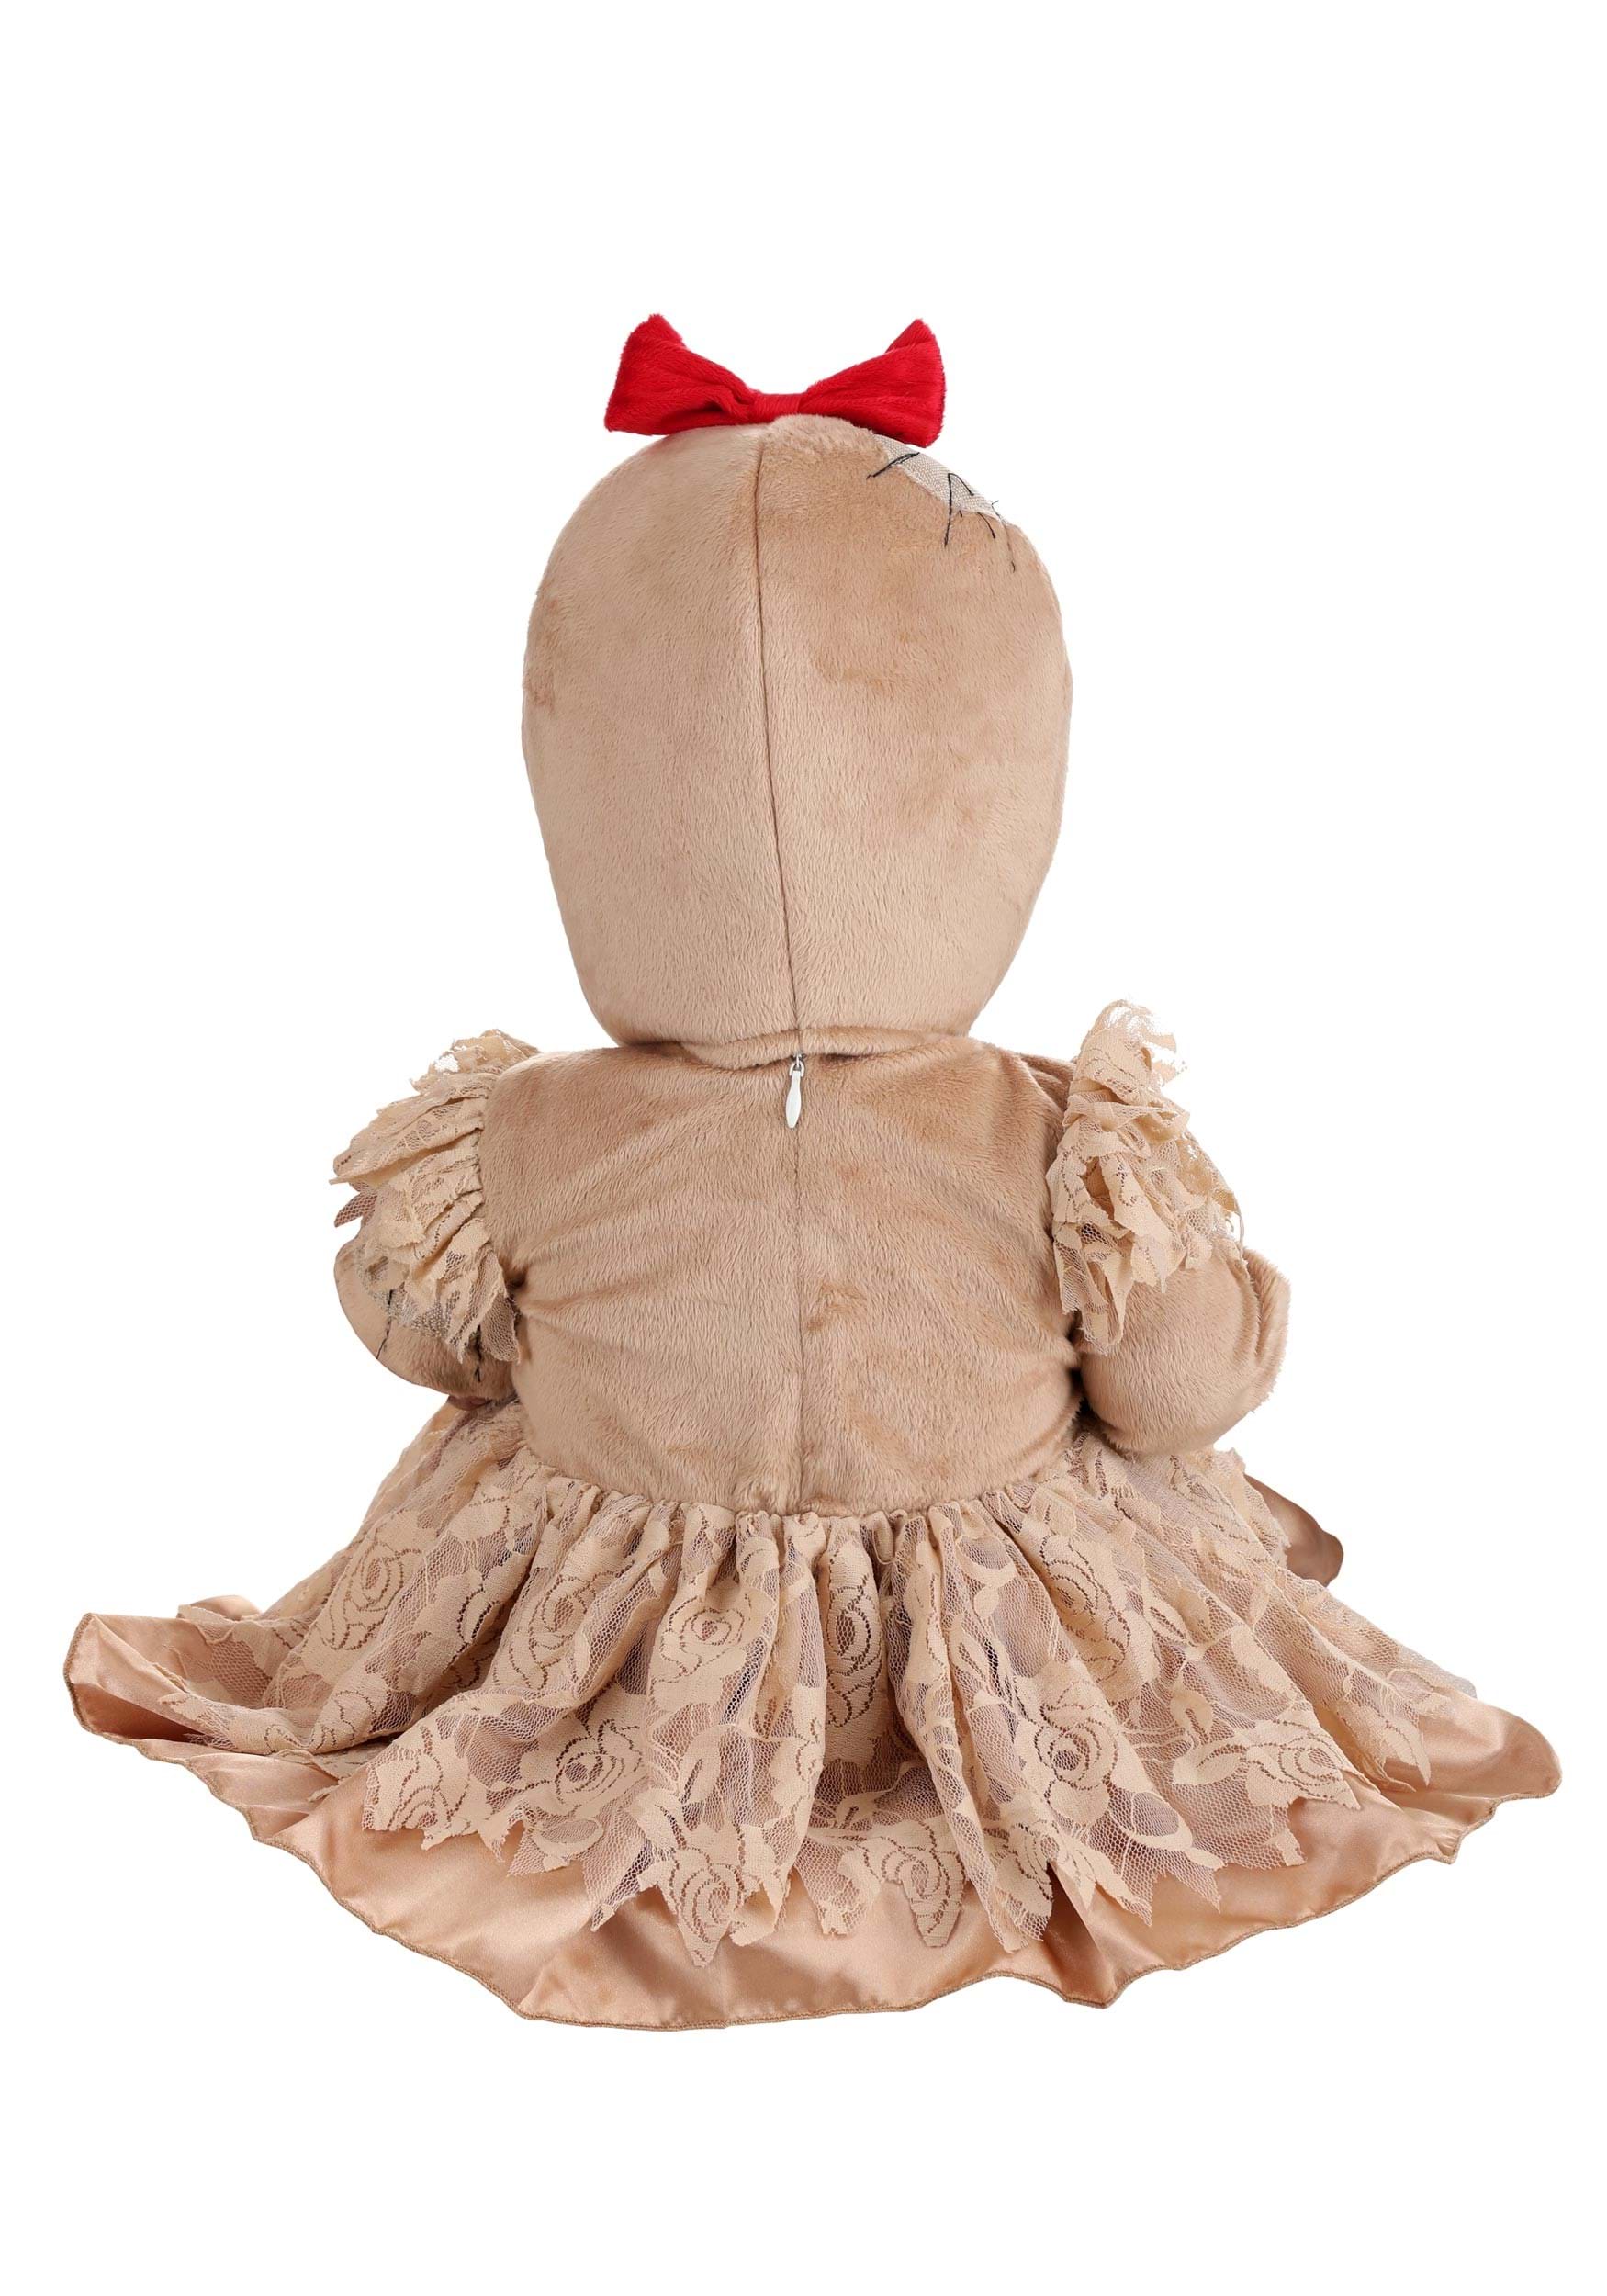 Infant Dress Voodoo Doll Costume